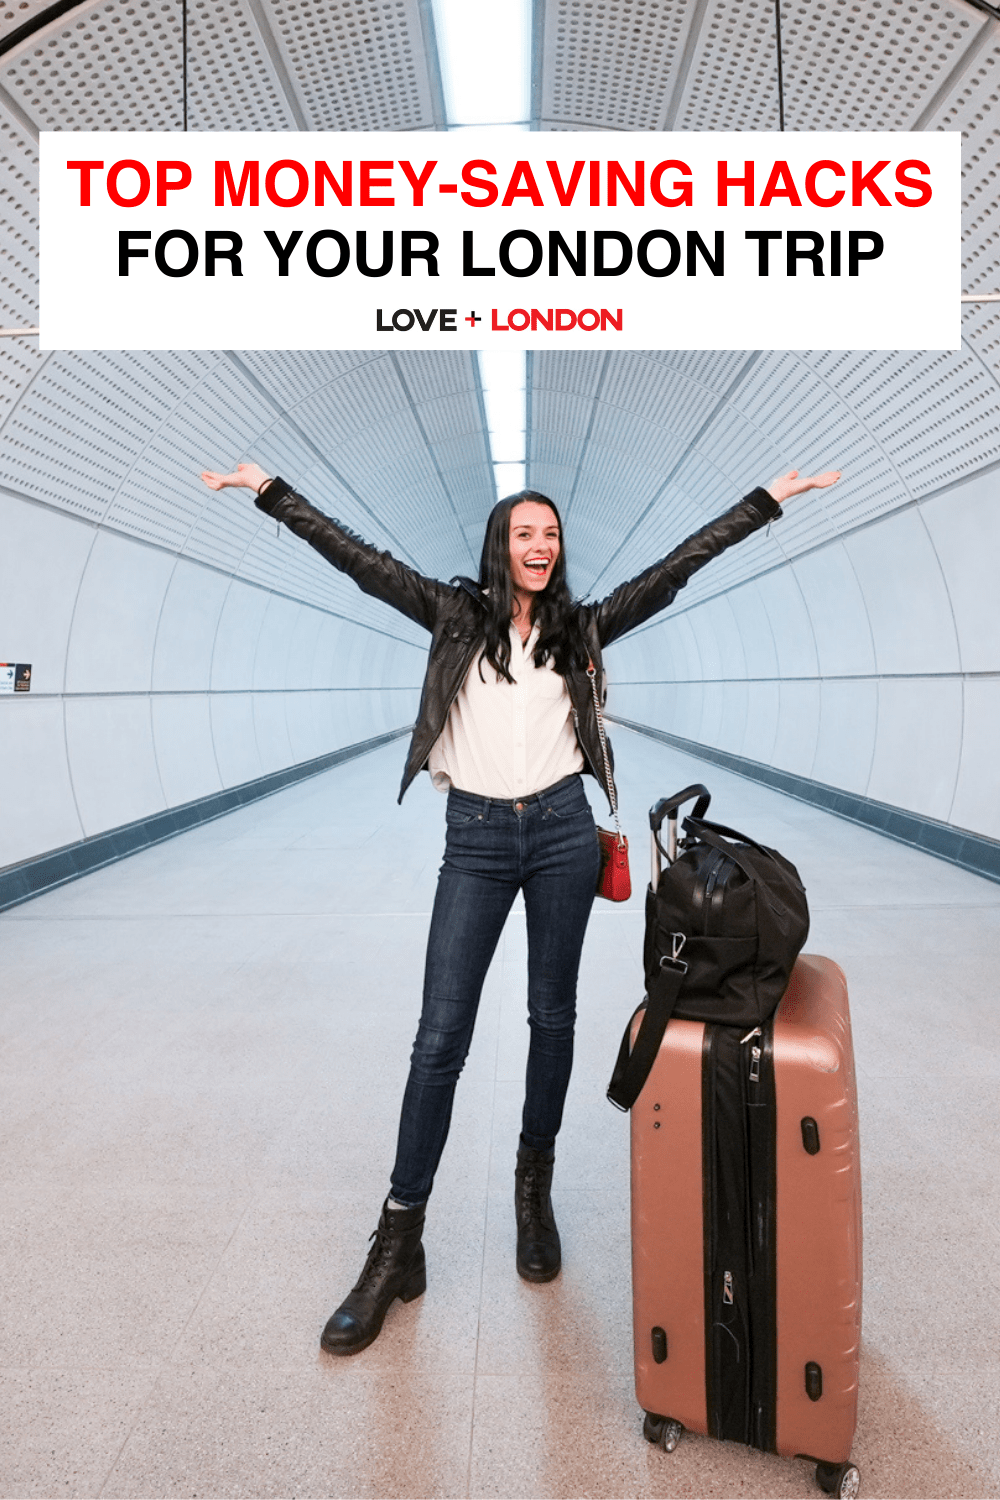 Top Money-Saving Hacks for Your London Trip